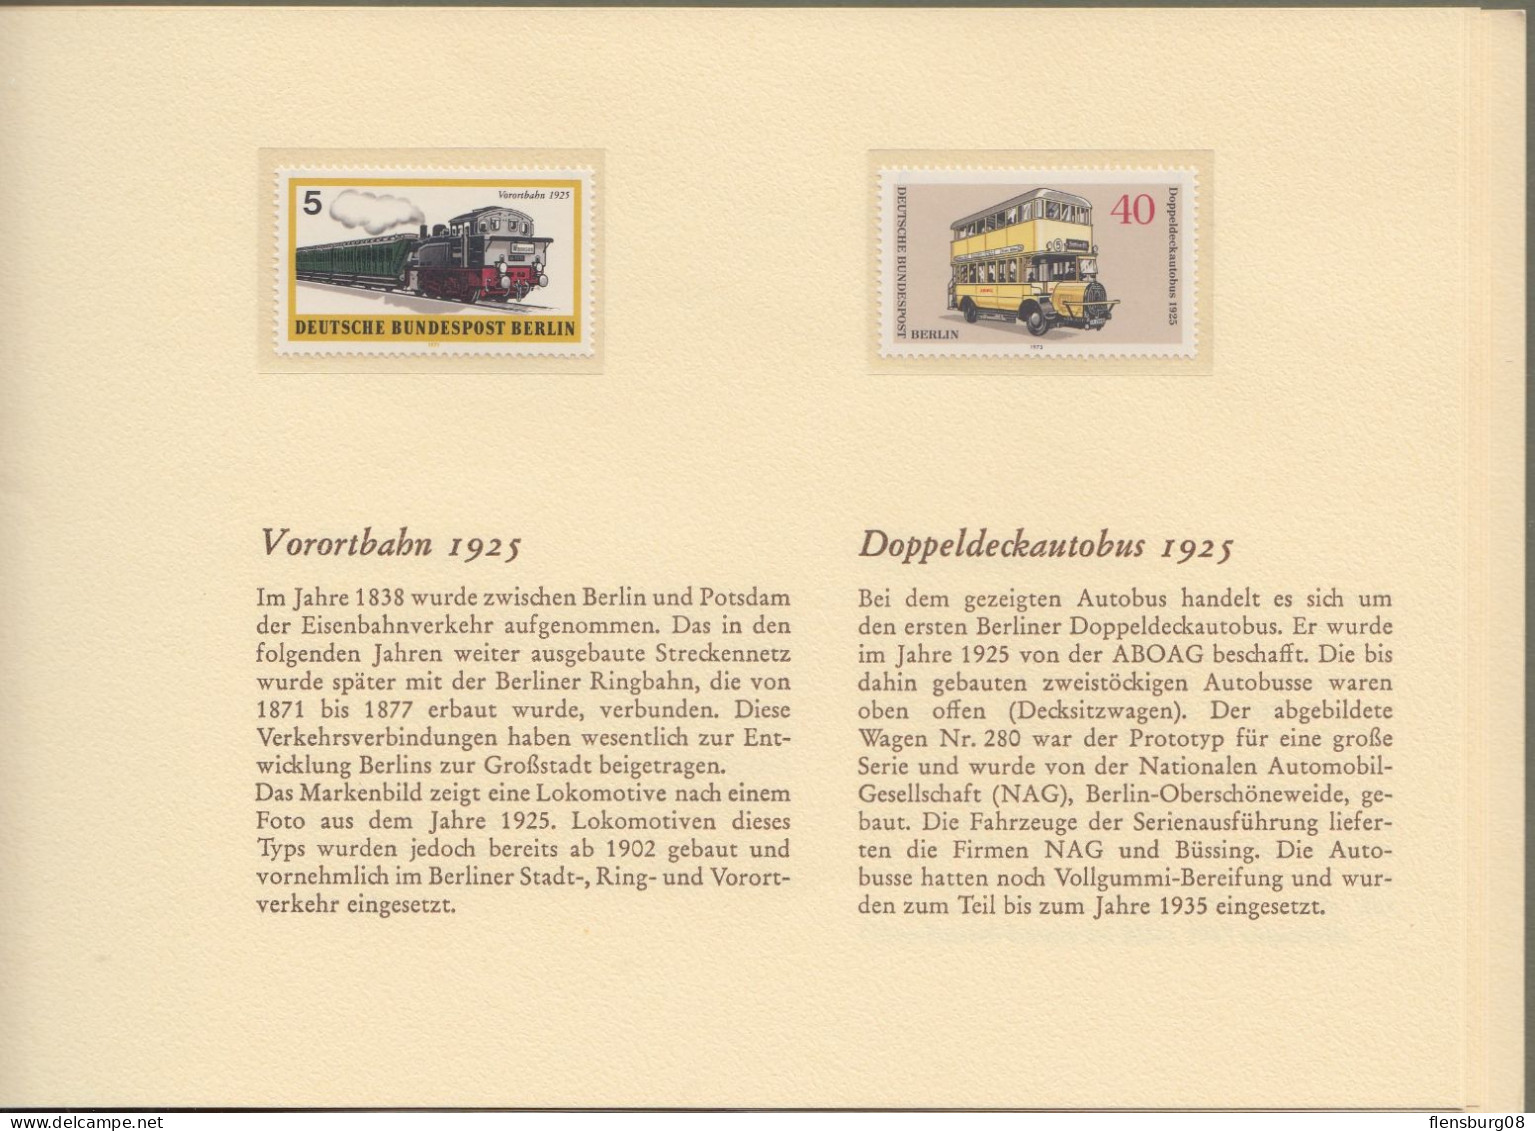 Berlin: minister booklet - Ministerbuch - Ministerheft: " Sonderpostwertzeichen  Berliner Verkehrsmittel 1973 "